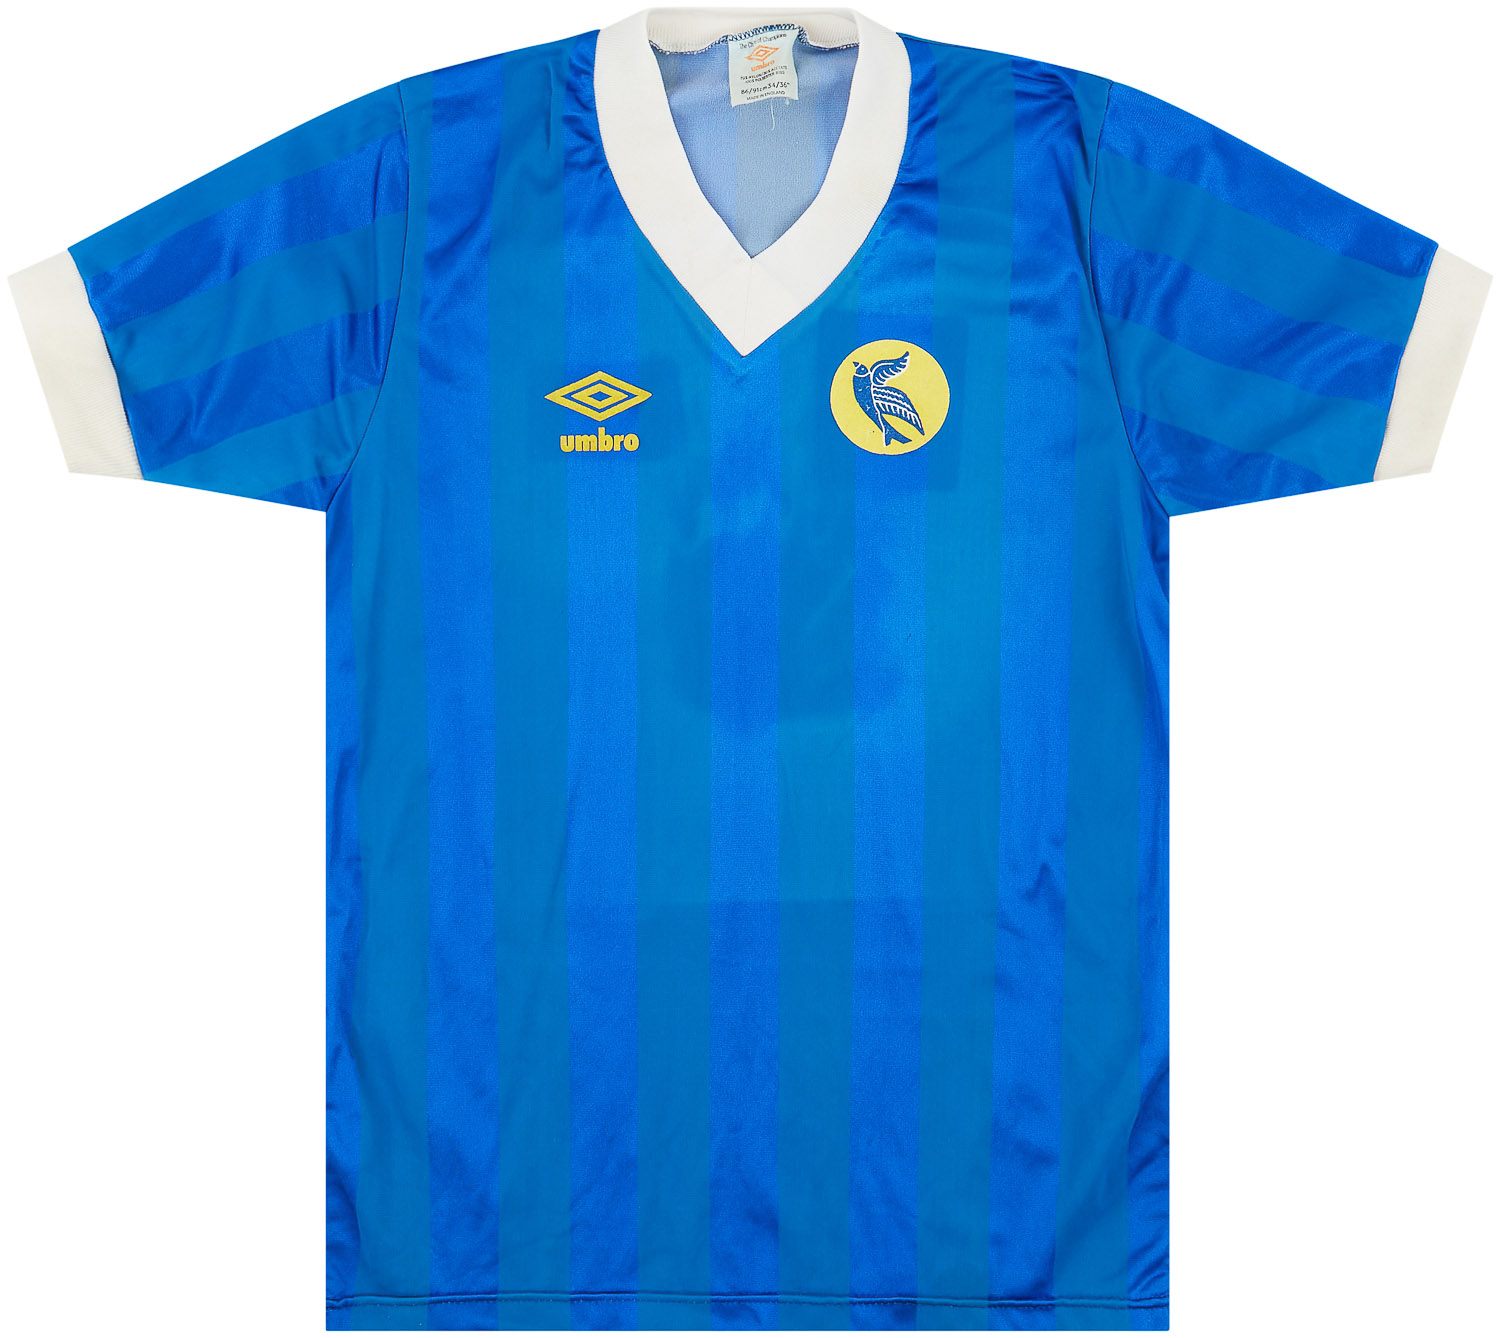 1983-84 Cardiff City Home Shirt - 8/10 - ()